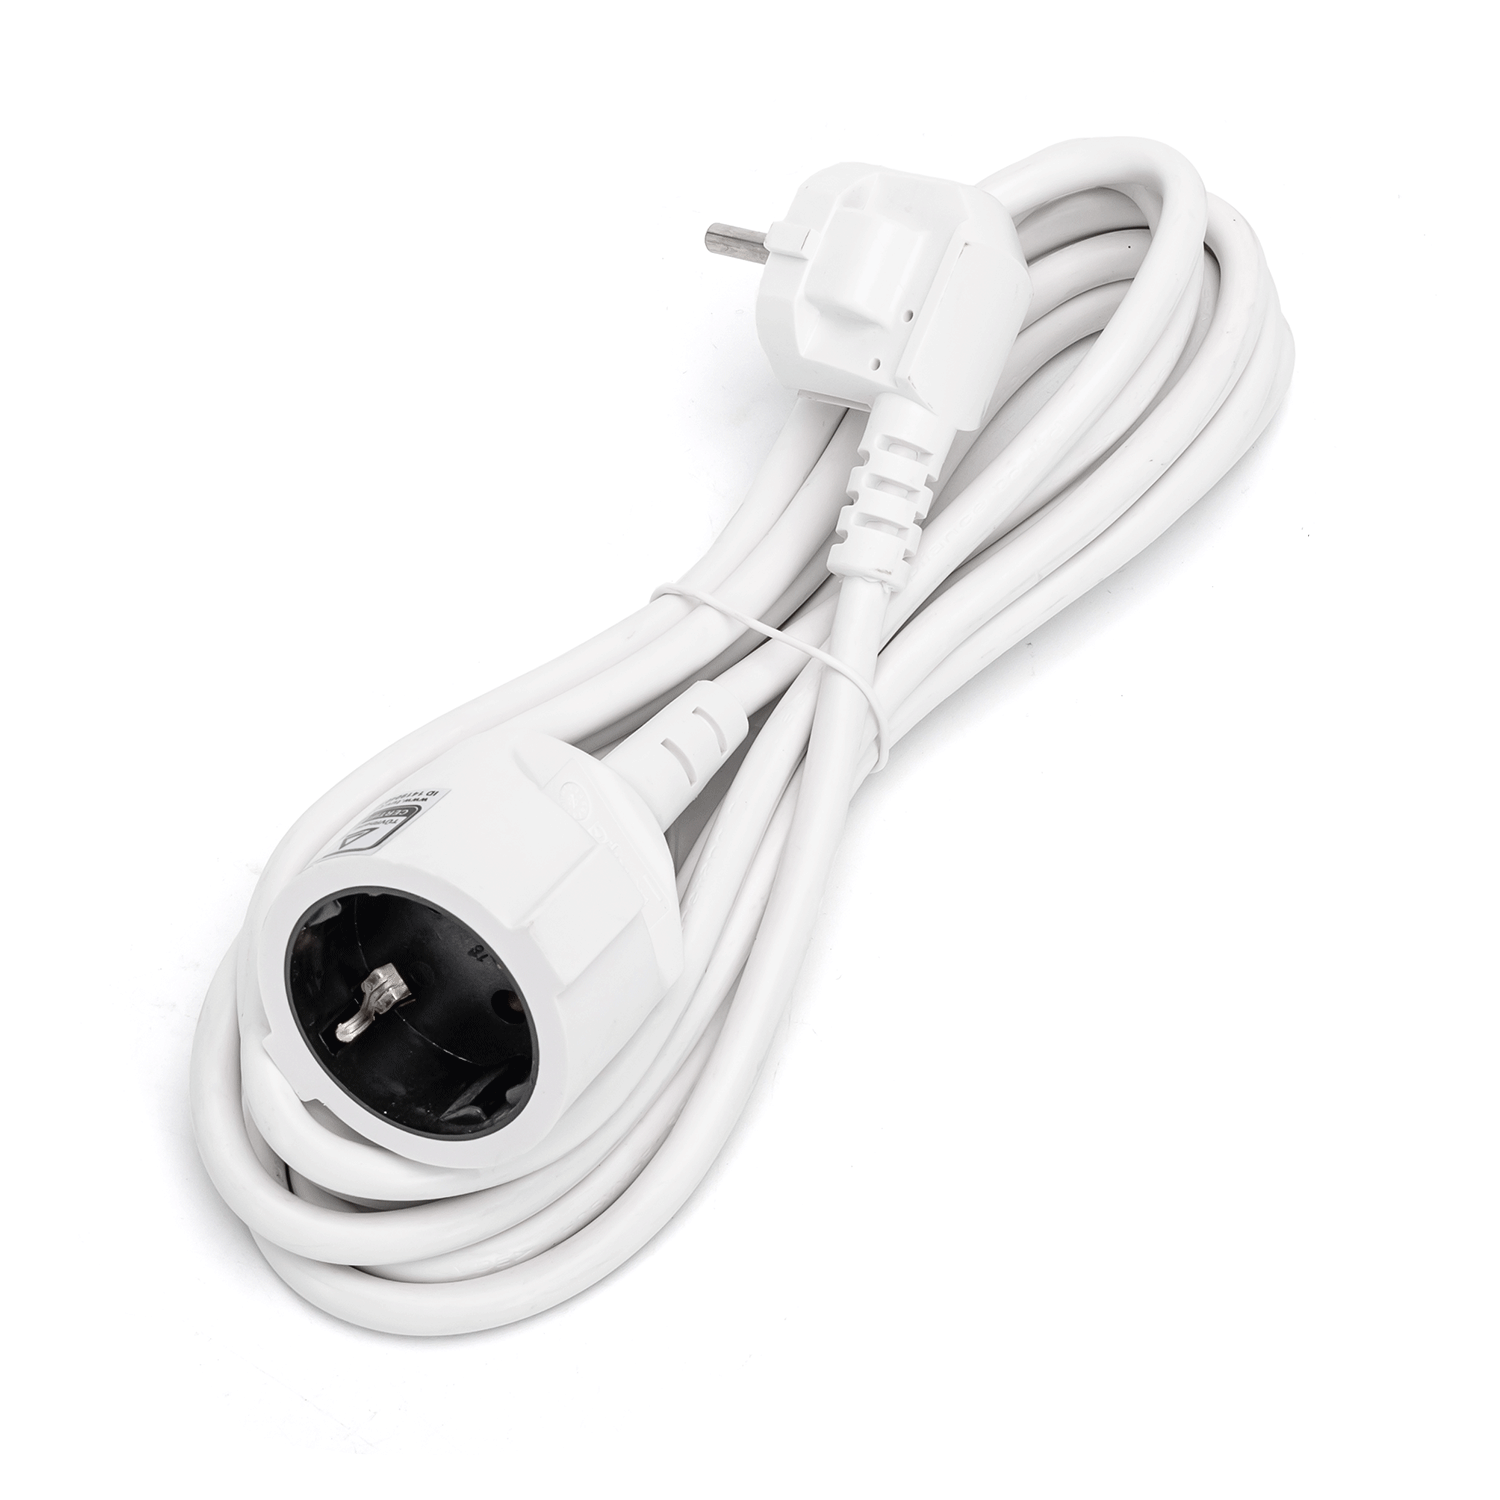 Prolongador cable manguera plana de 4 m - Prendeluz